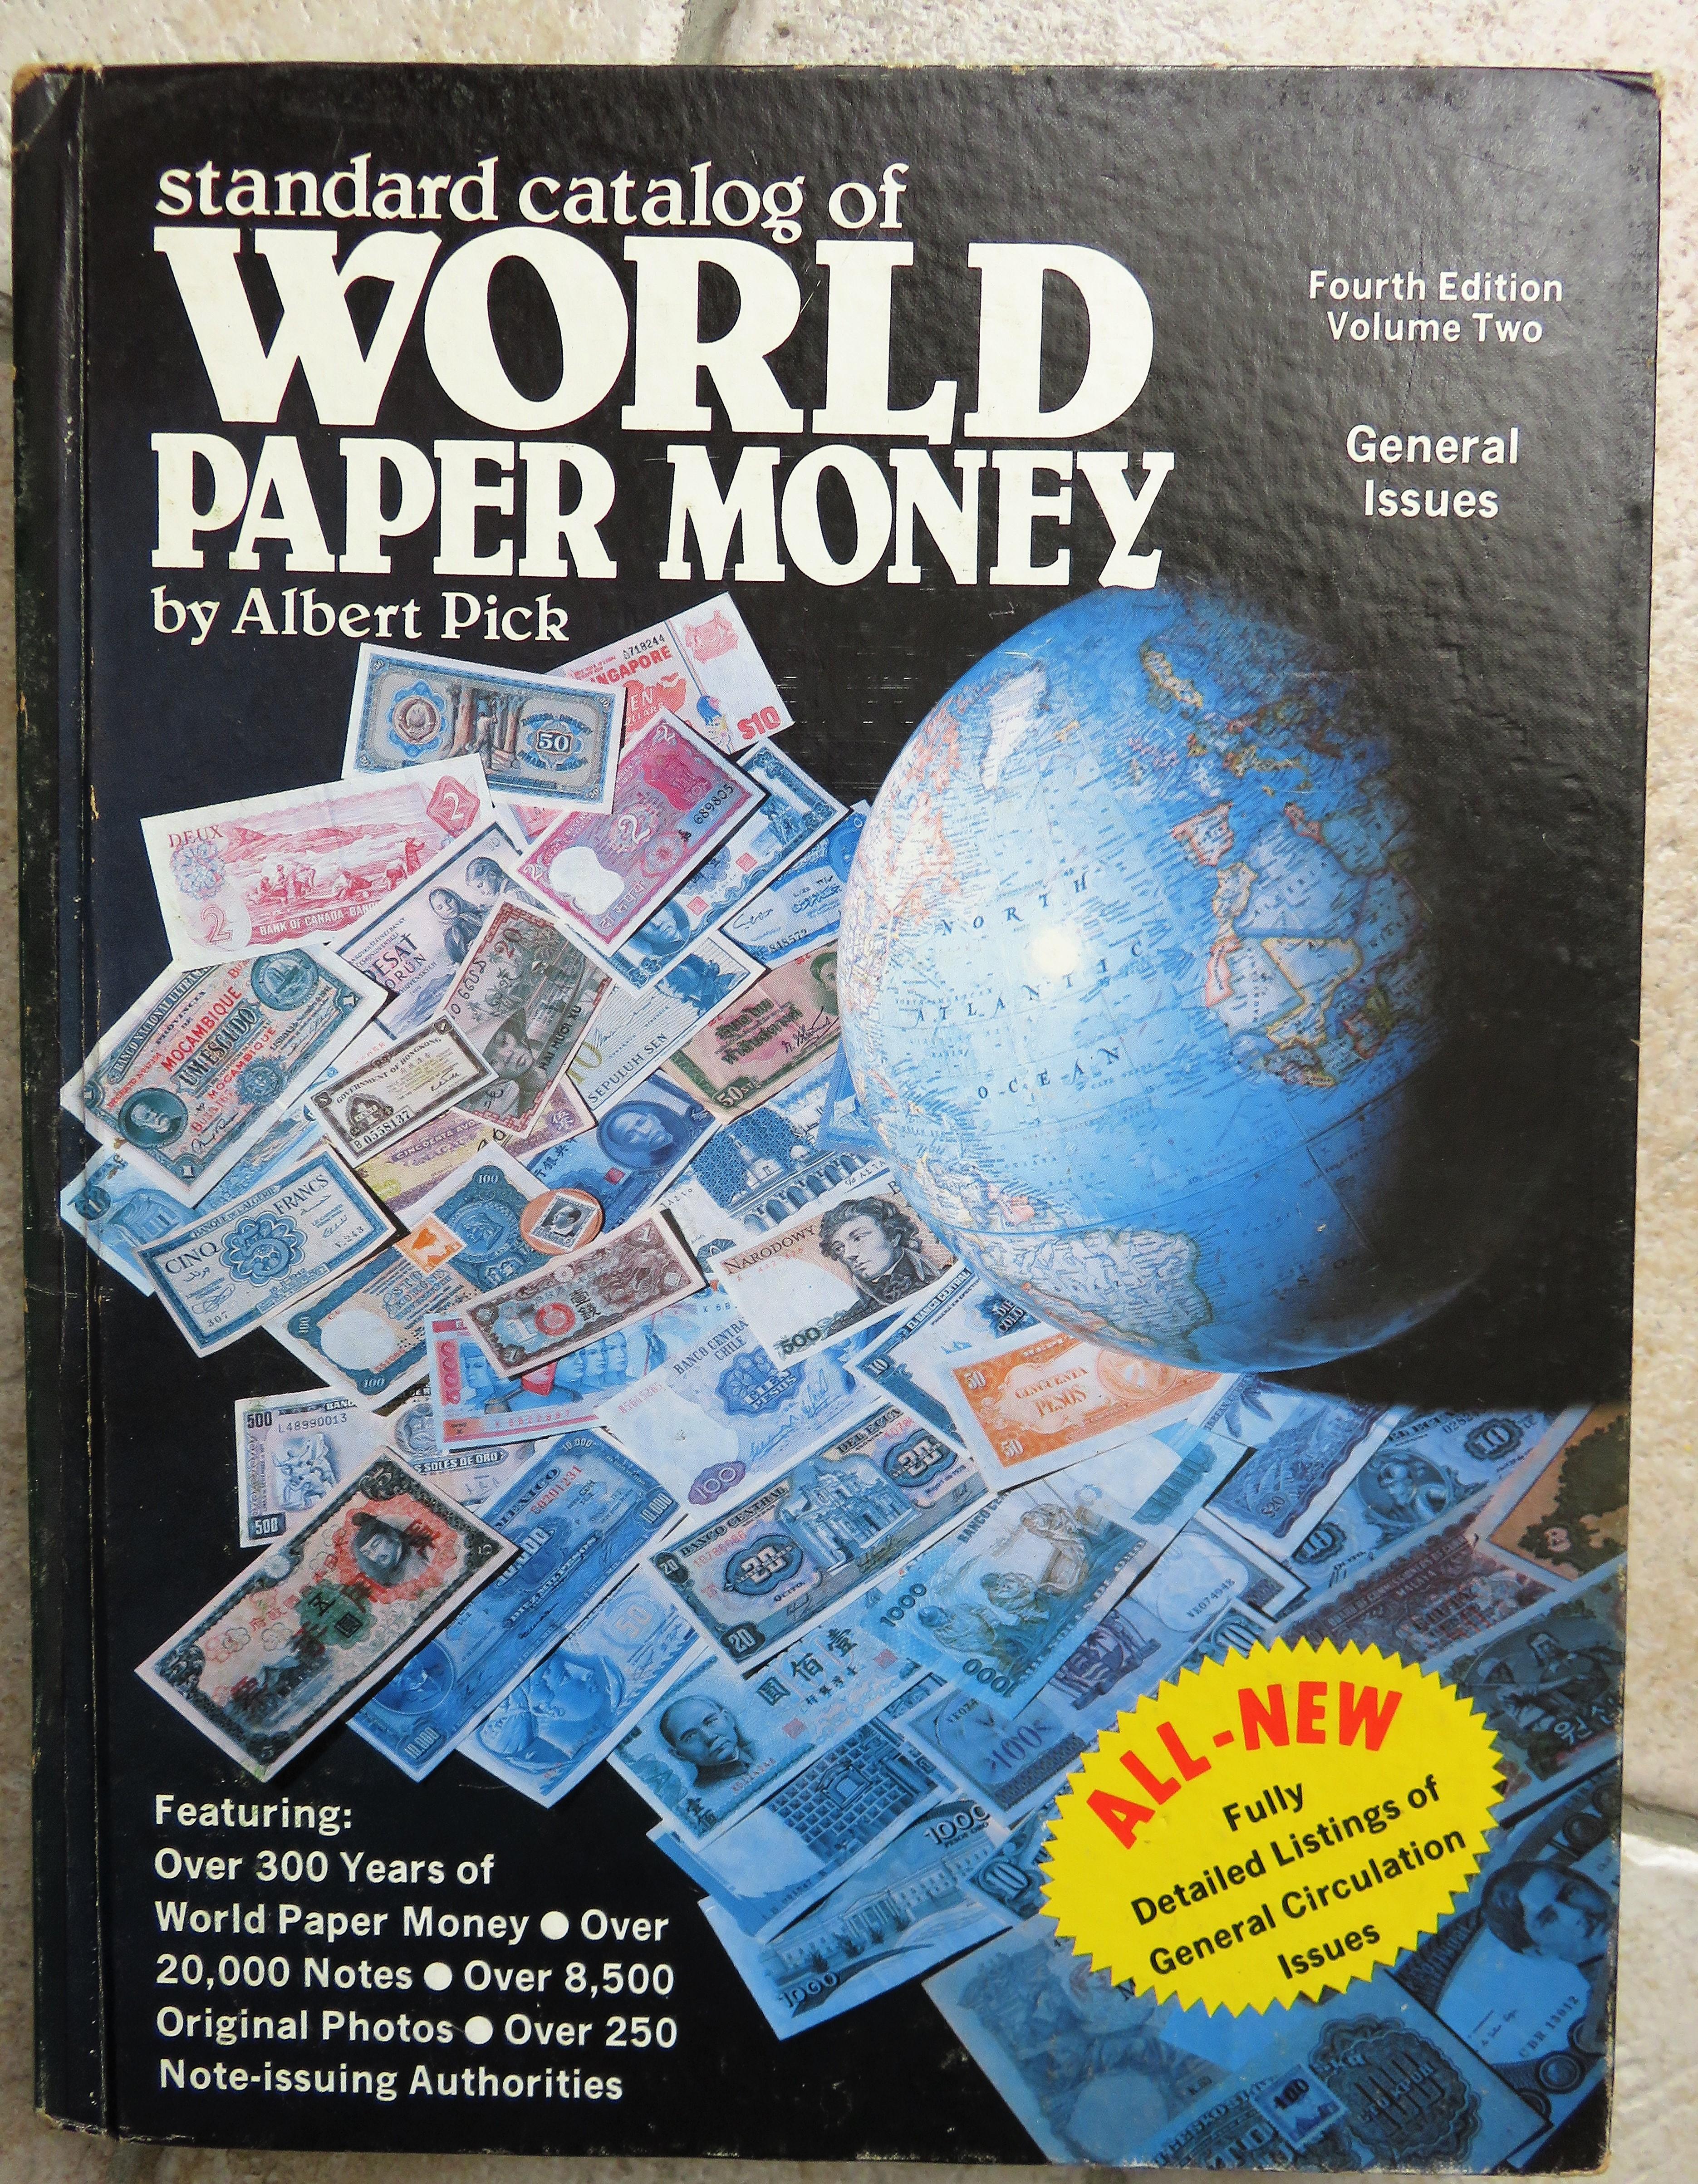 Standard catalog of world paper money - Pick, Albert